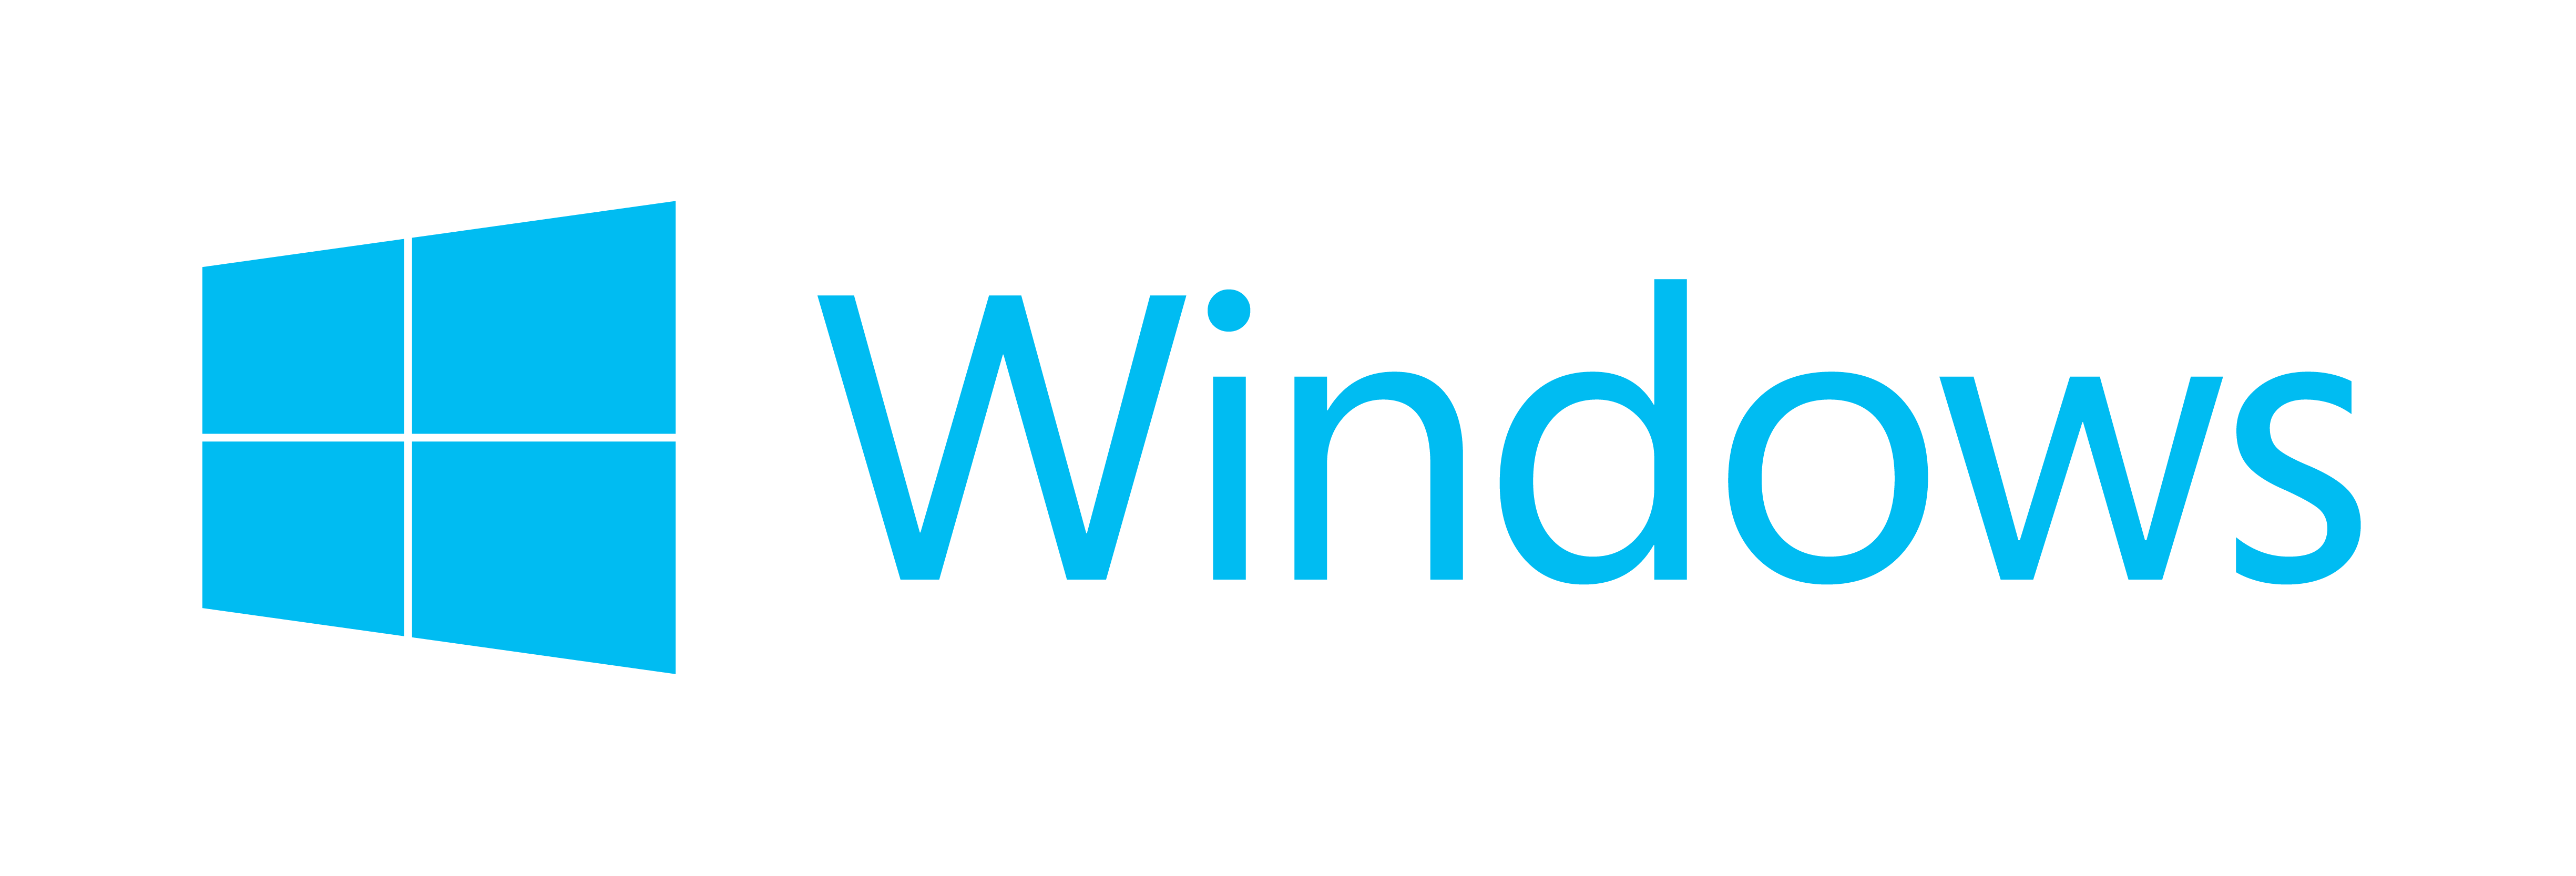 Windows Microsoft Logo PNG Photo Image